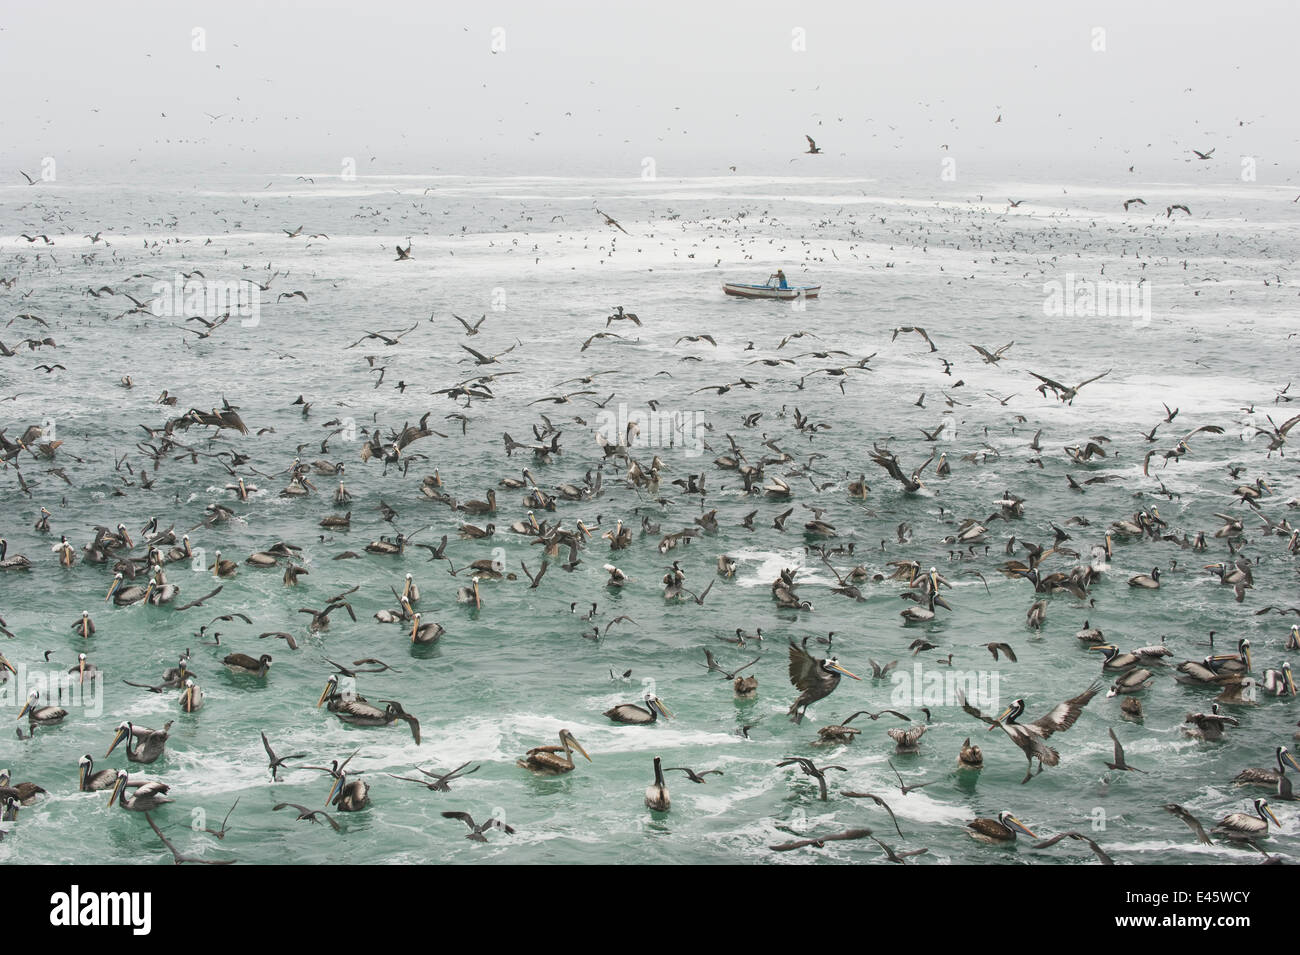 Large flock of seabirds including Peruvian pelicans (Pelecanus thagus) and Inca terns (Larosterna inca) feeding near a small boat, Pucusana, Peru Stock Photo